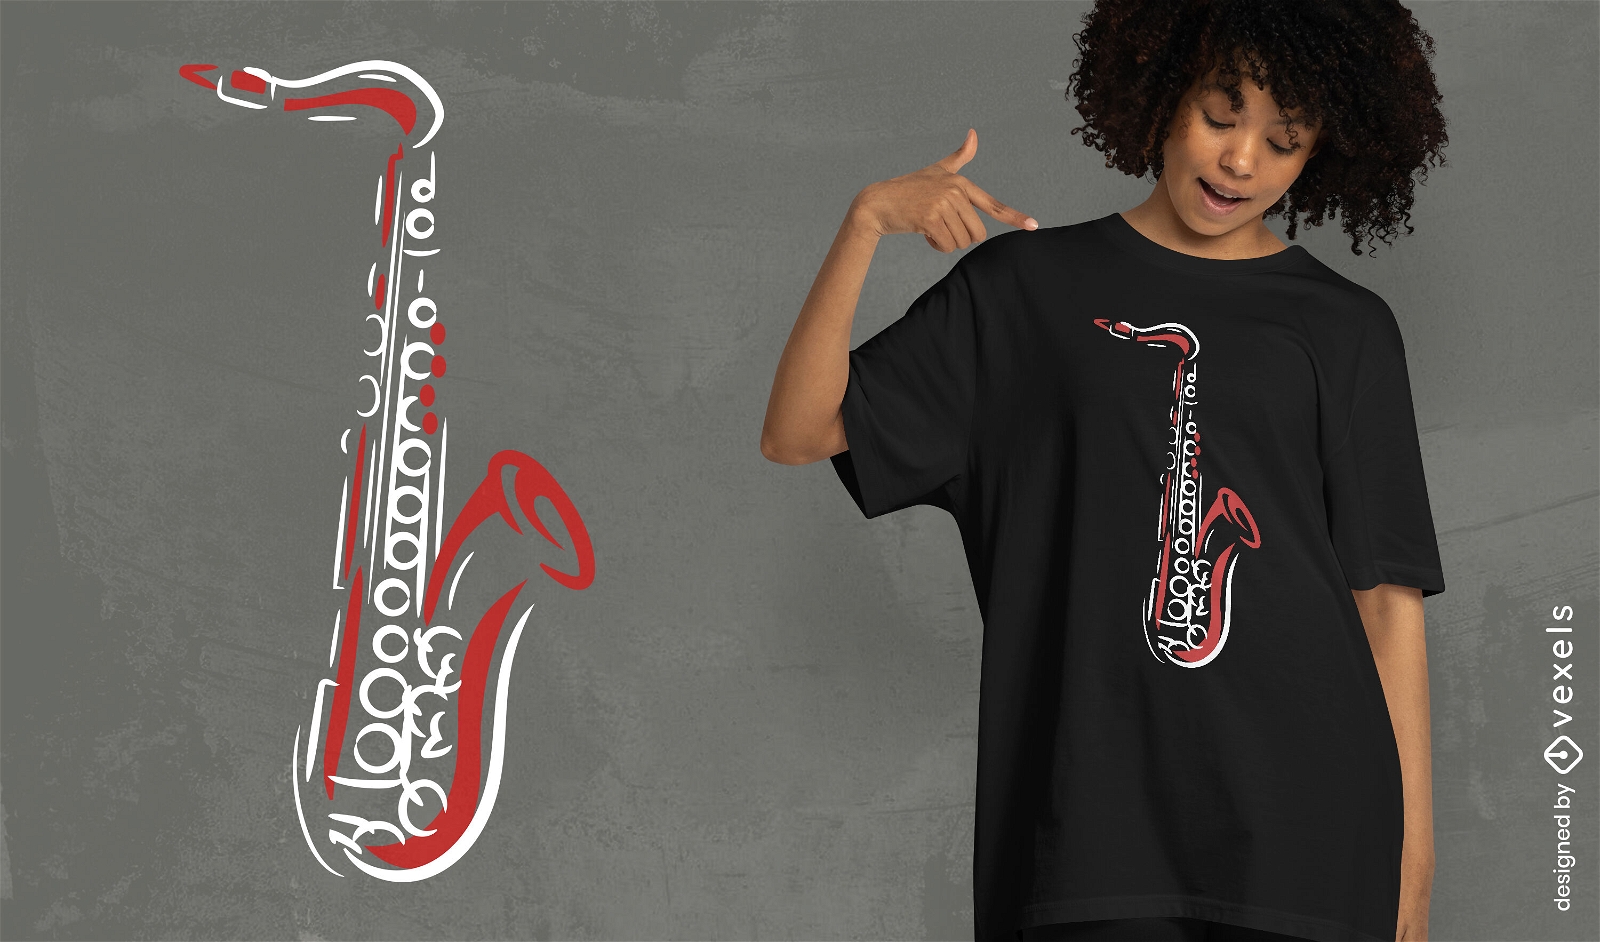 Saxophone musical lines t-shirt design